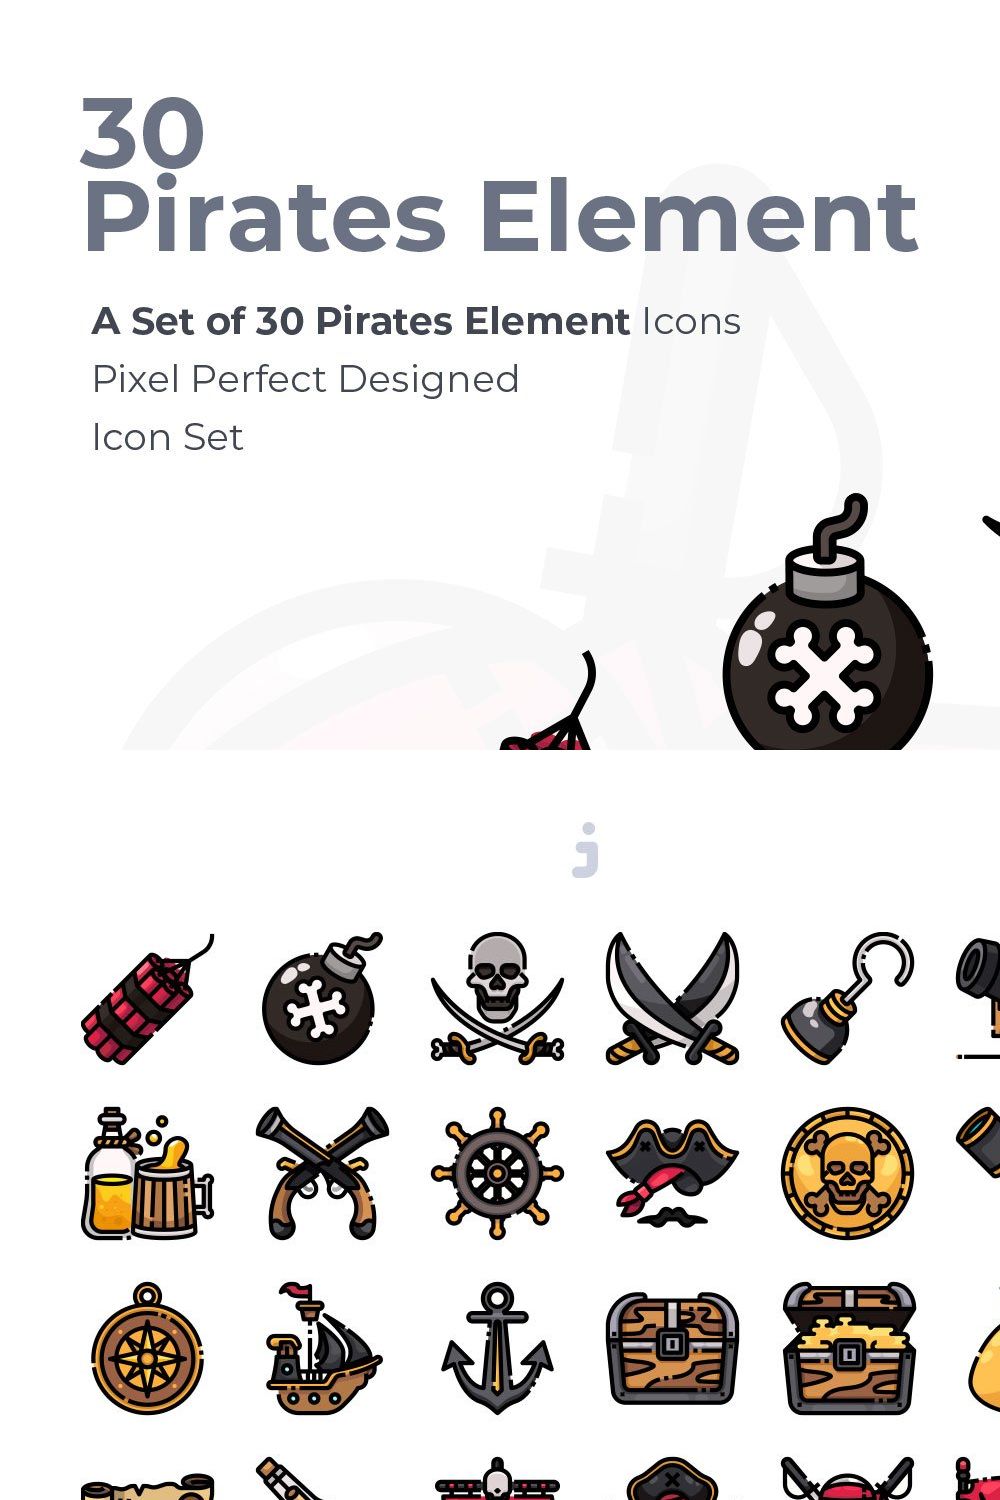 30 Pirates Element Icon set pinterest preview image.